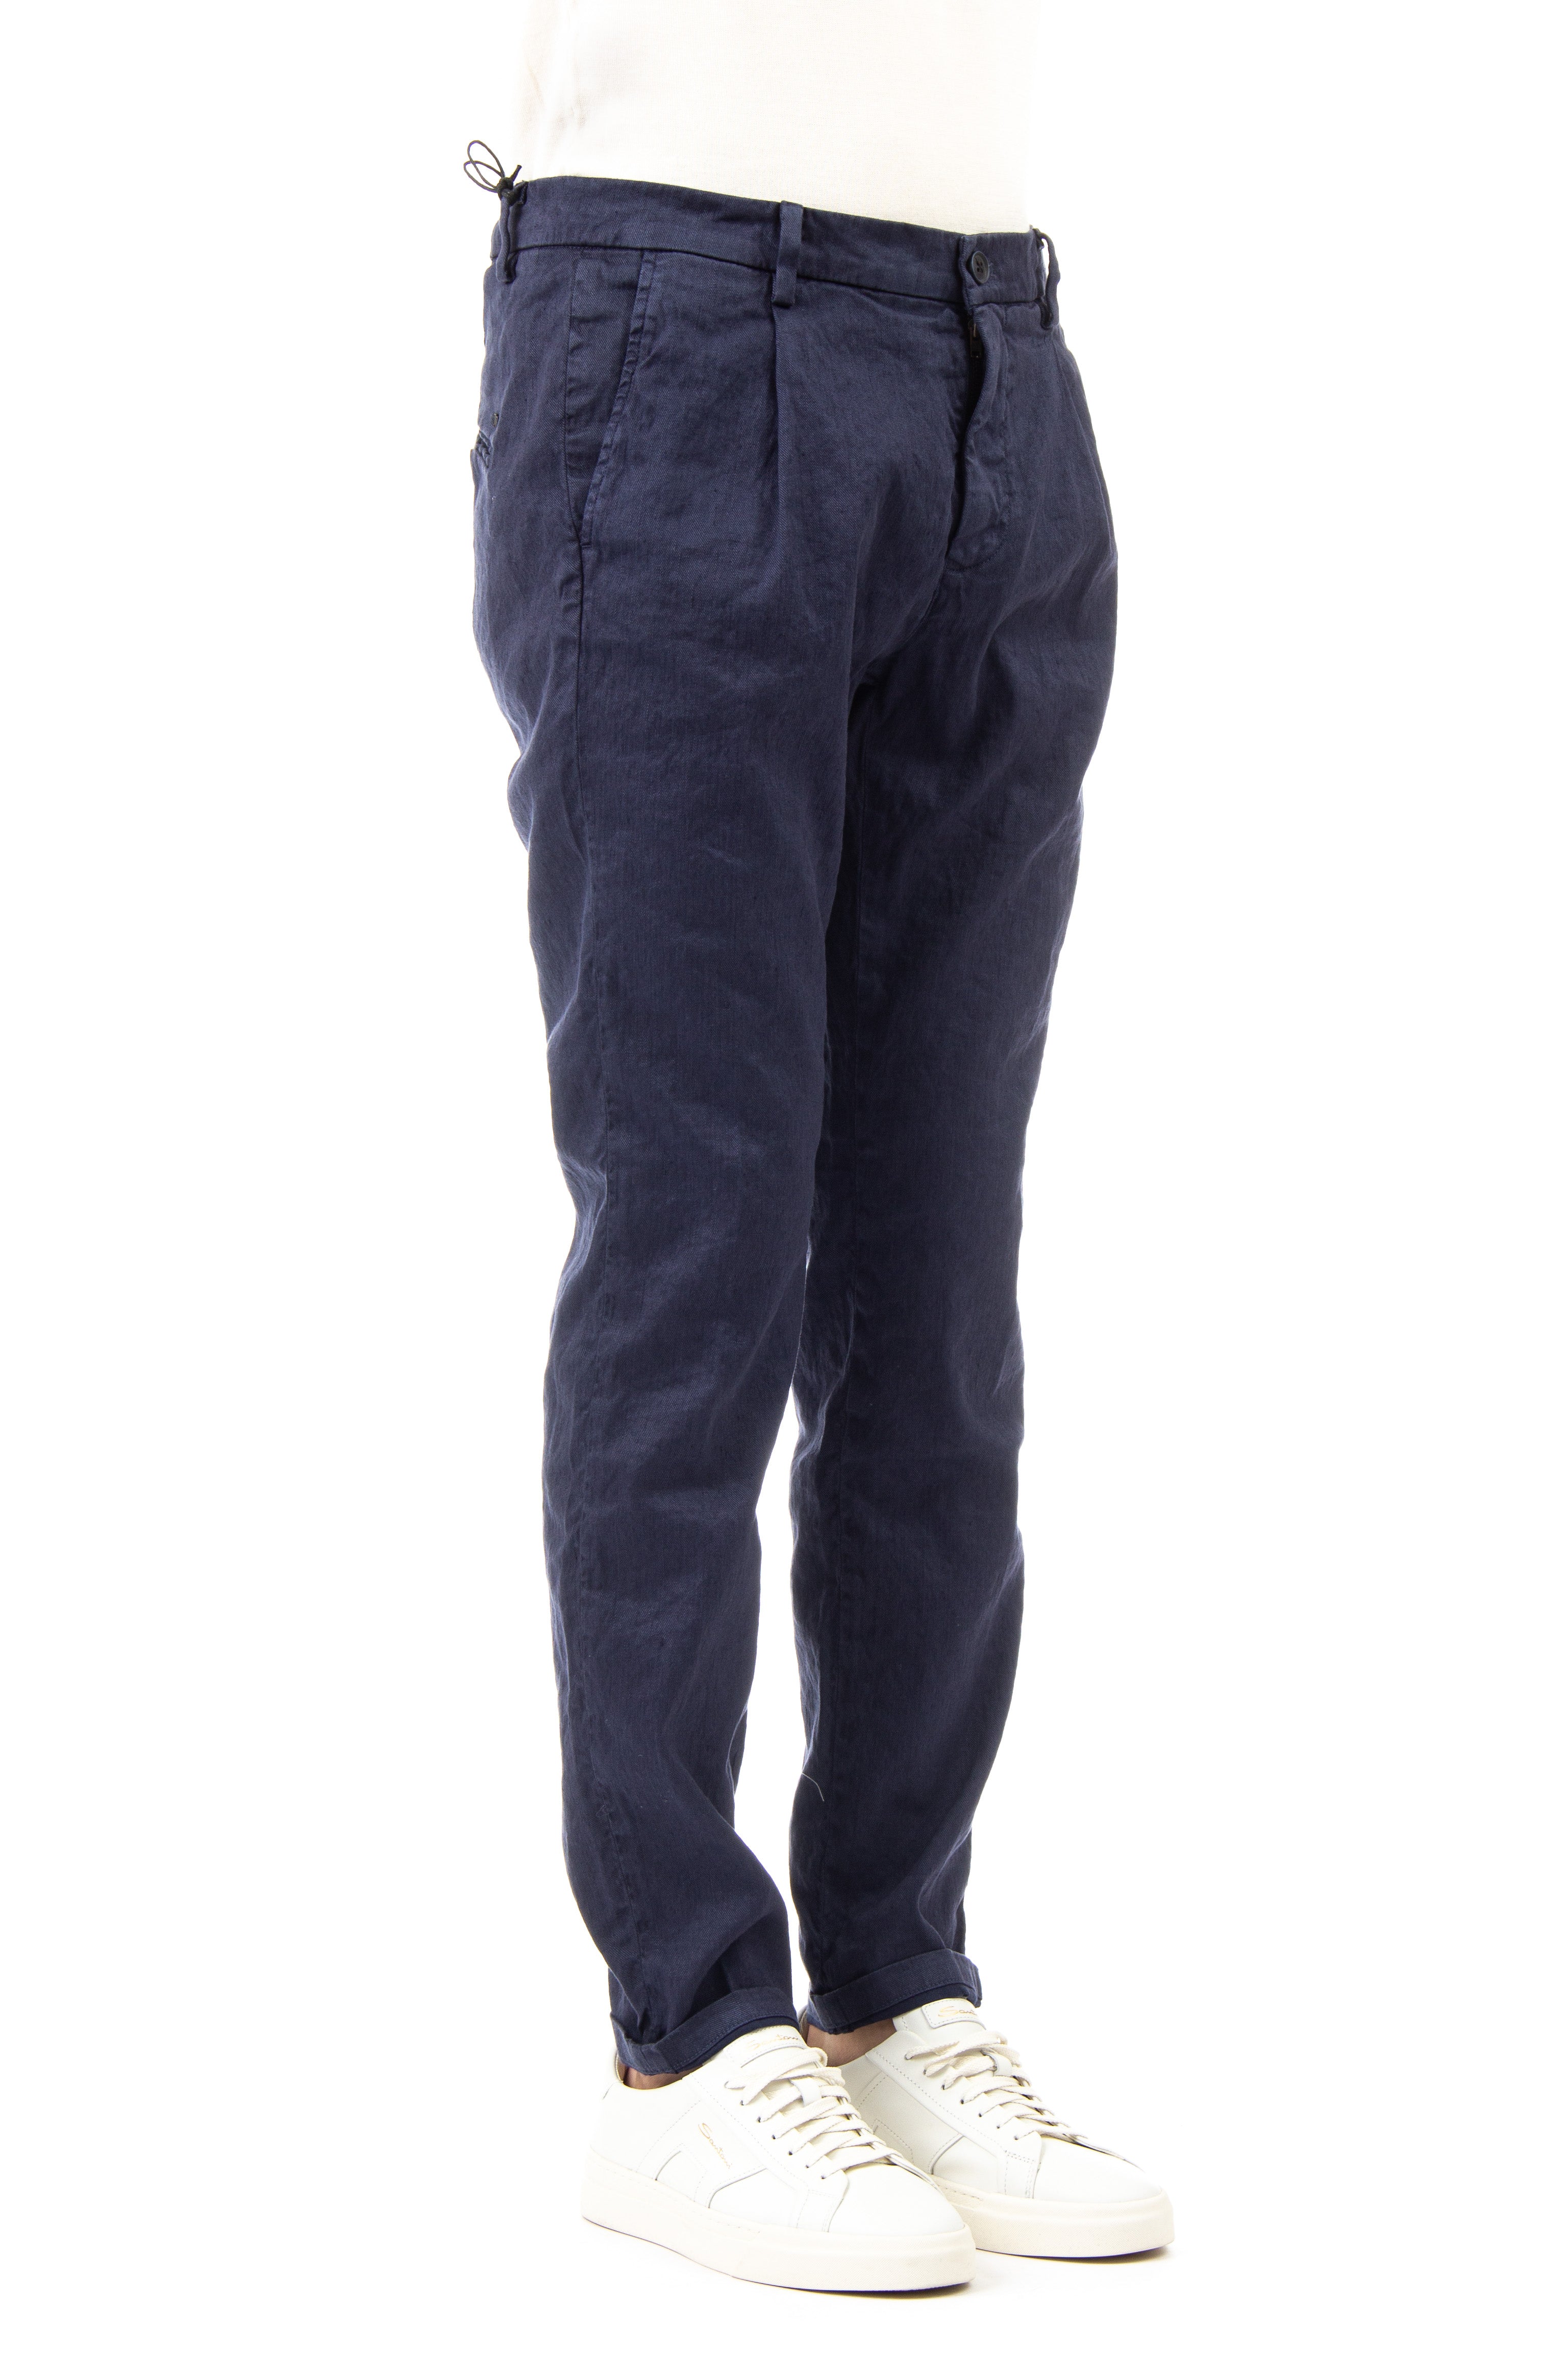 Amalfi model linen-cotton trousers